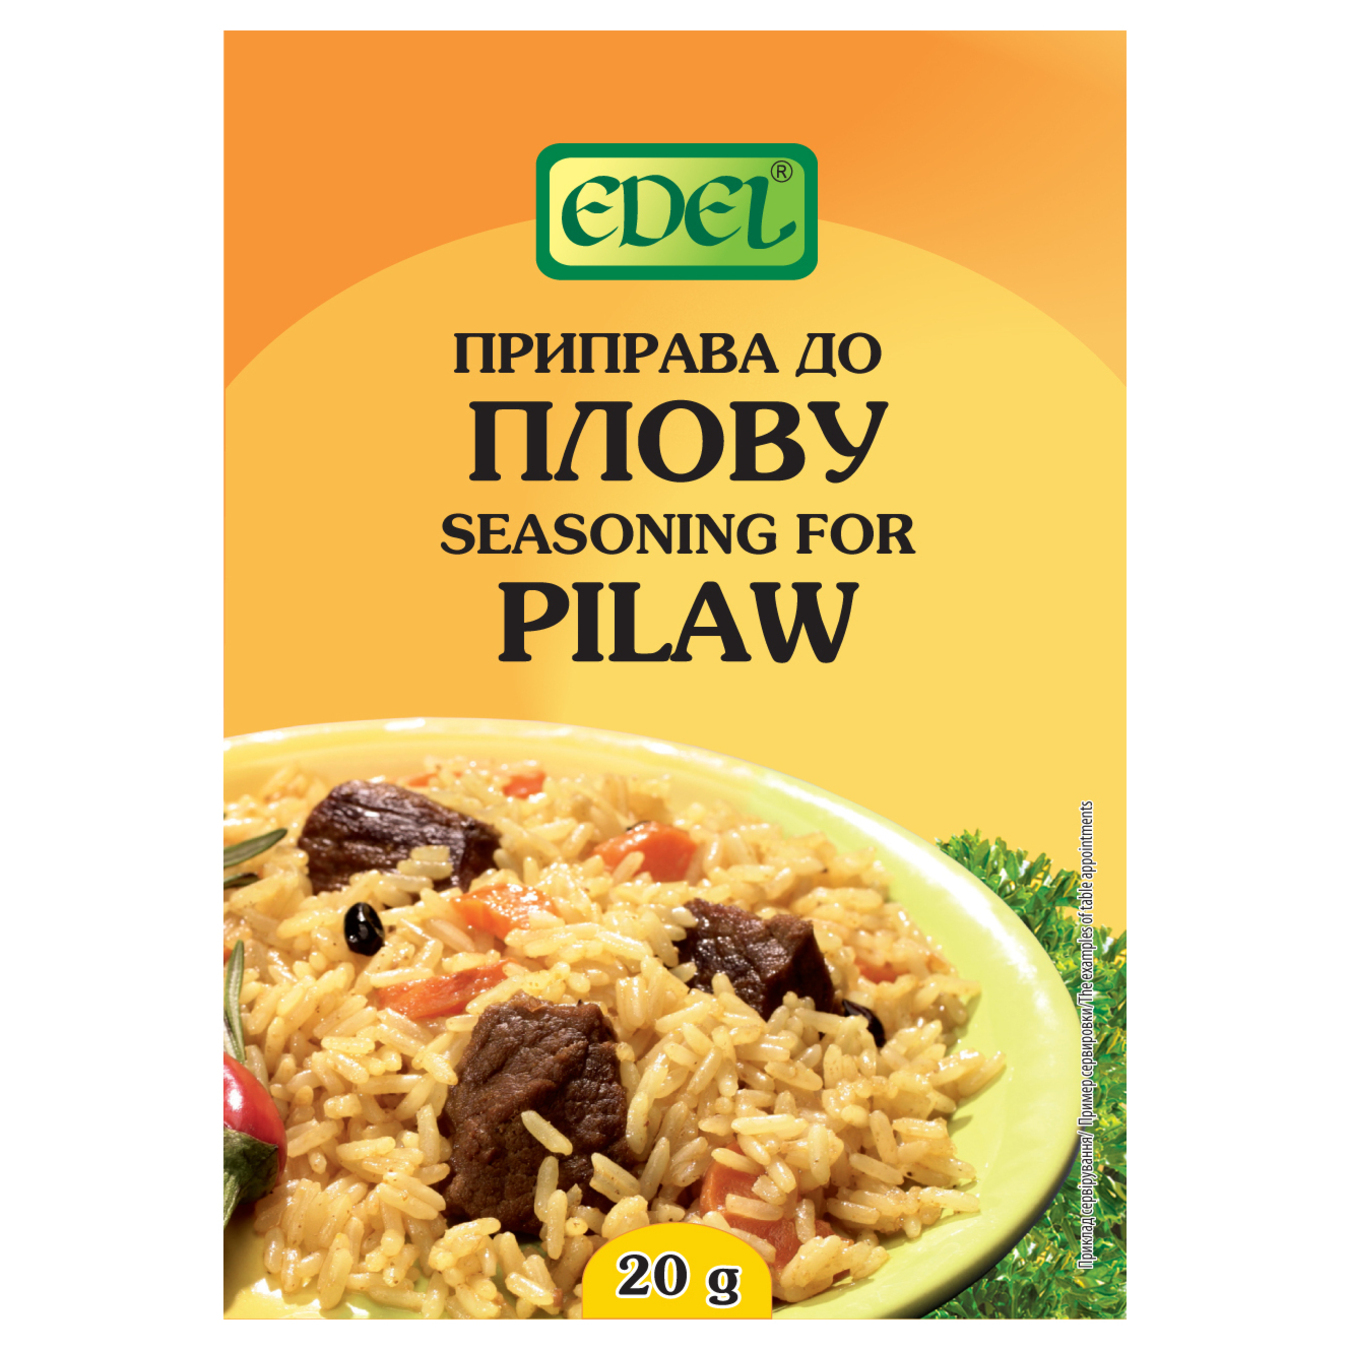 EDEL seasoning for pilaf 20g